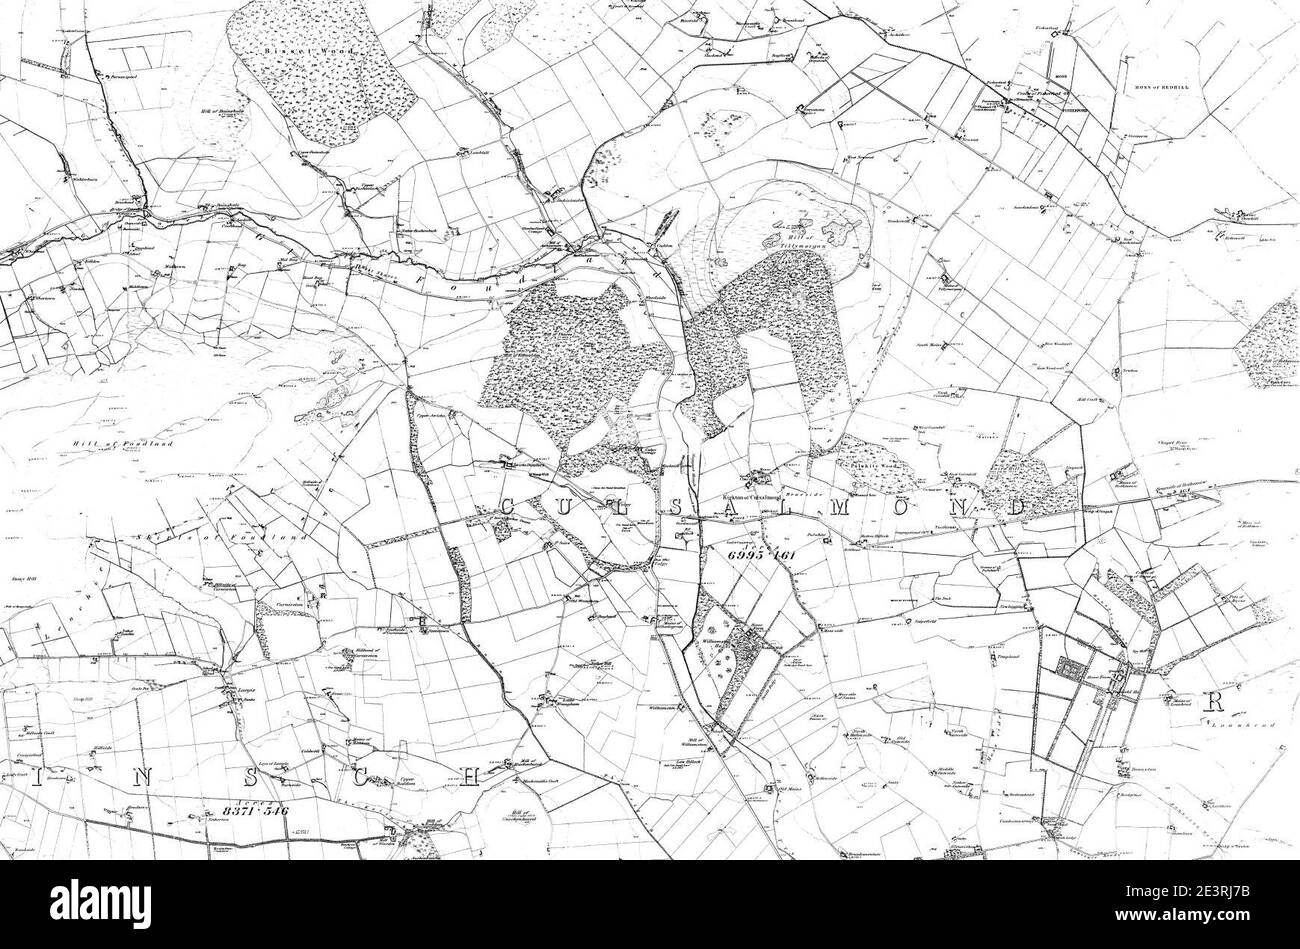 Map Of Aberdeenshire Os Map Name 035 00 Ordnance Survey 1868 1874 2E3RJ7B 